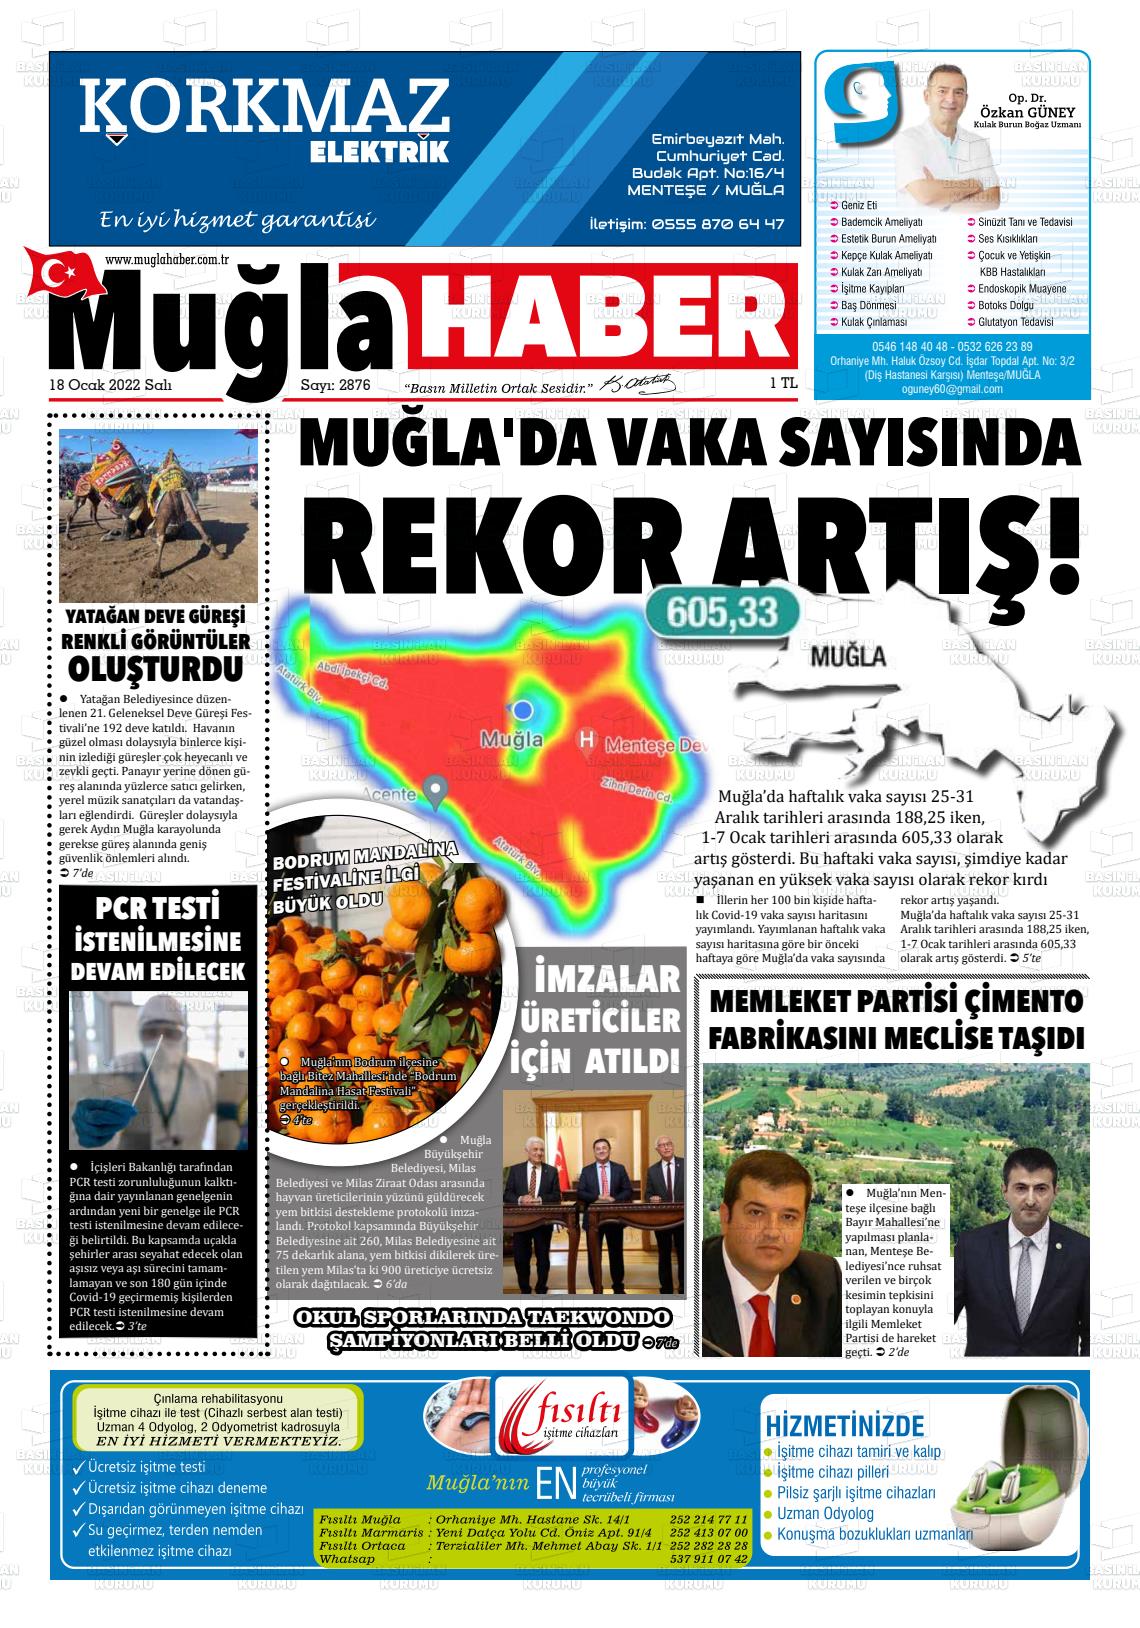 18 Ocak 2022 Muğla Haber Gazete Manşeti